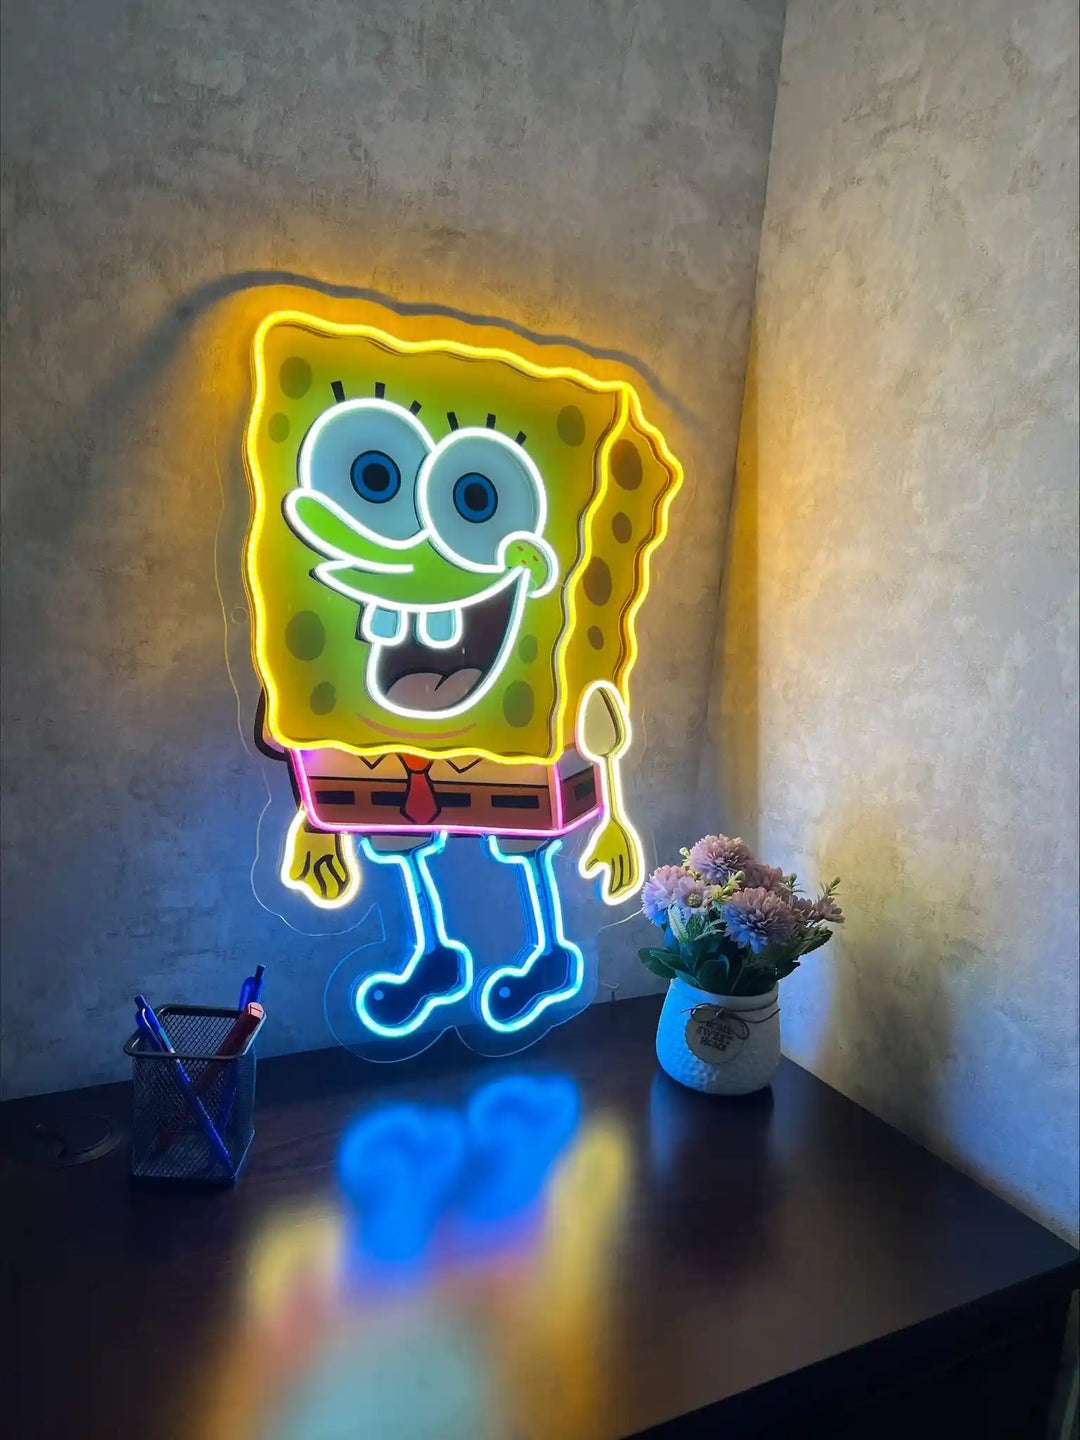 SpongeBob SquarePants UV x Neon Artwork: Nautical Delight - Vibrant underwater colors, whimsical design - from manhattonneons.com.